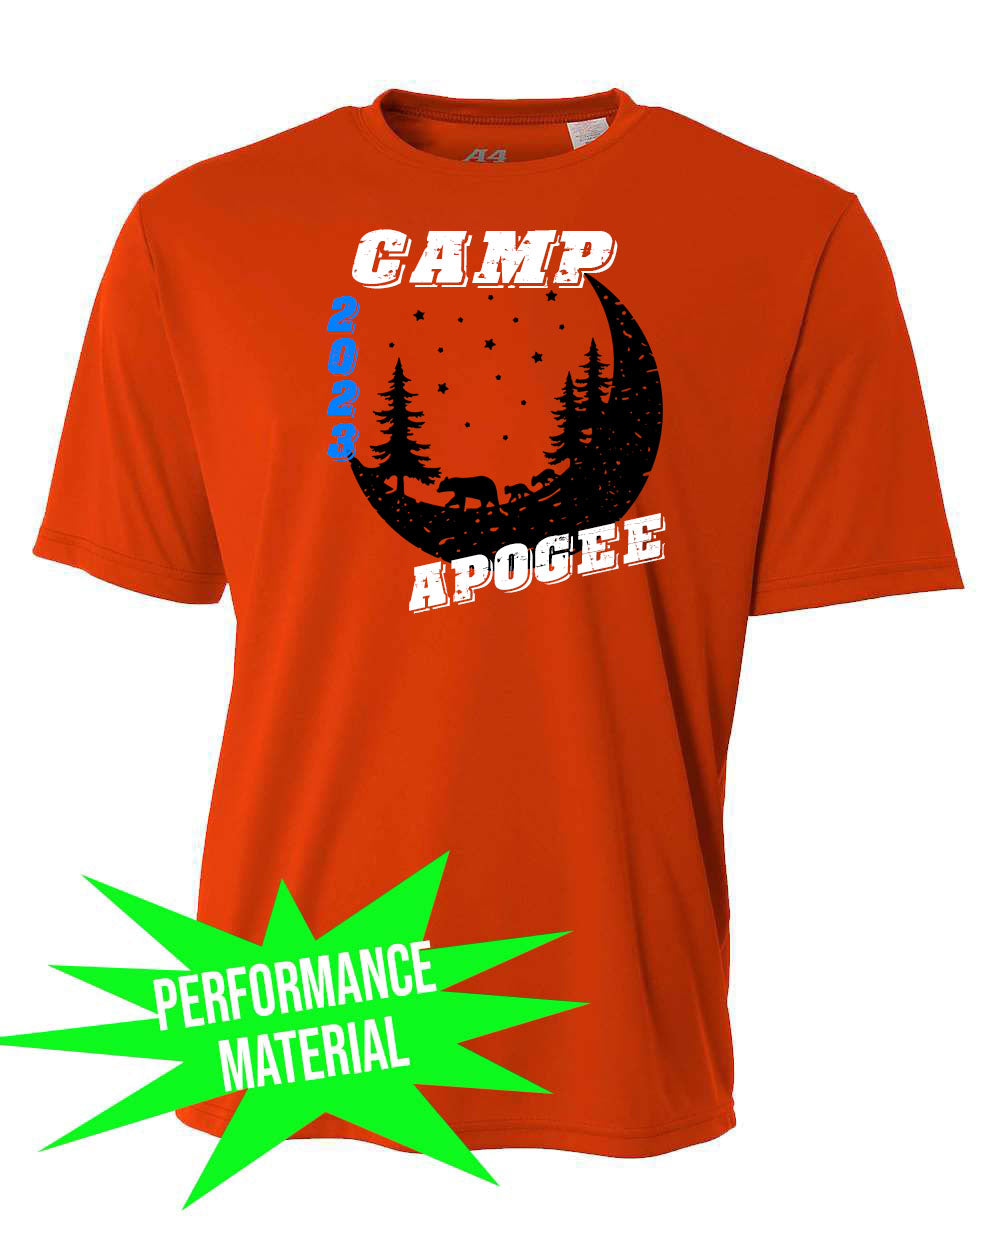 Hilltop Camp Performance Material design 1 T-Shirt